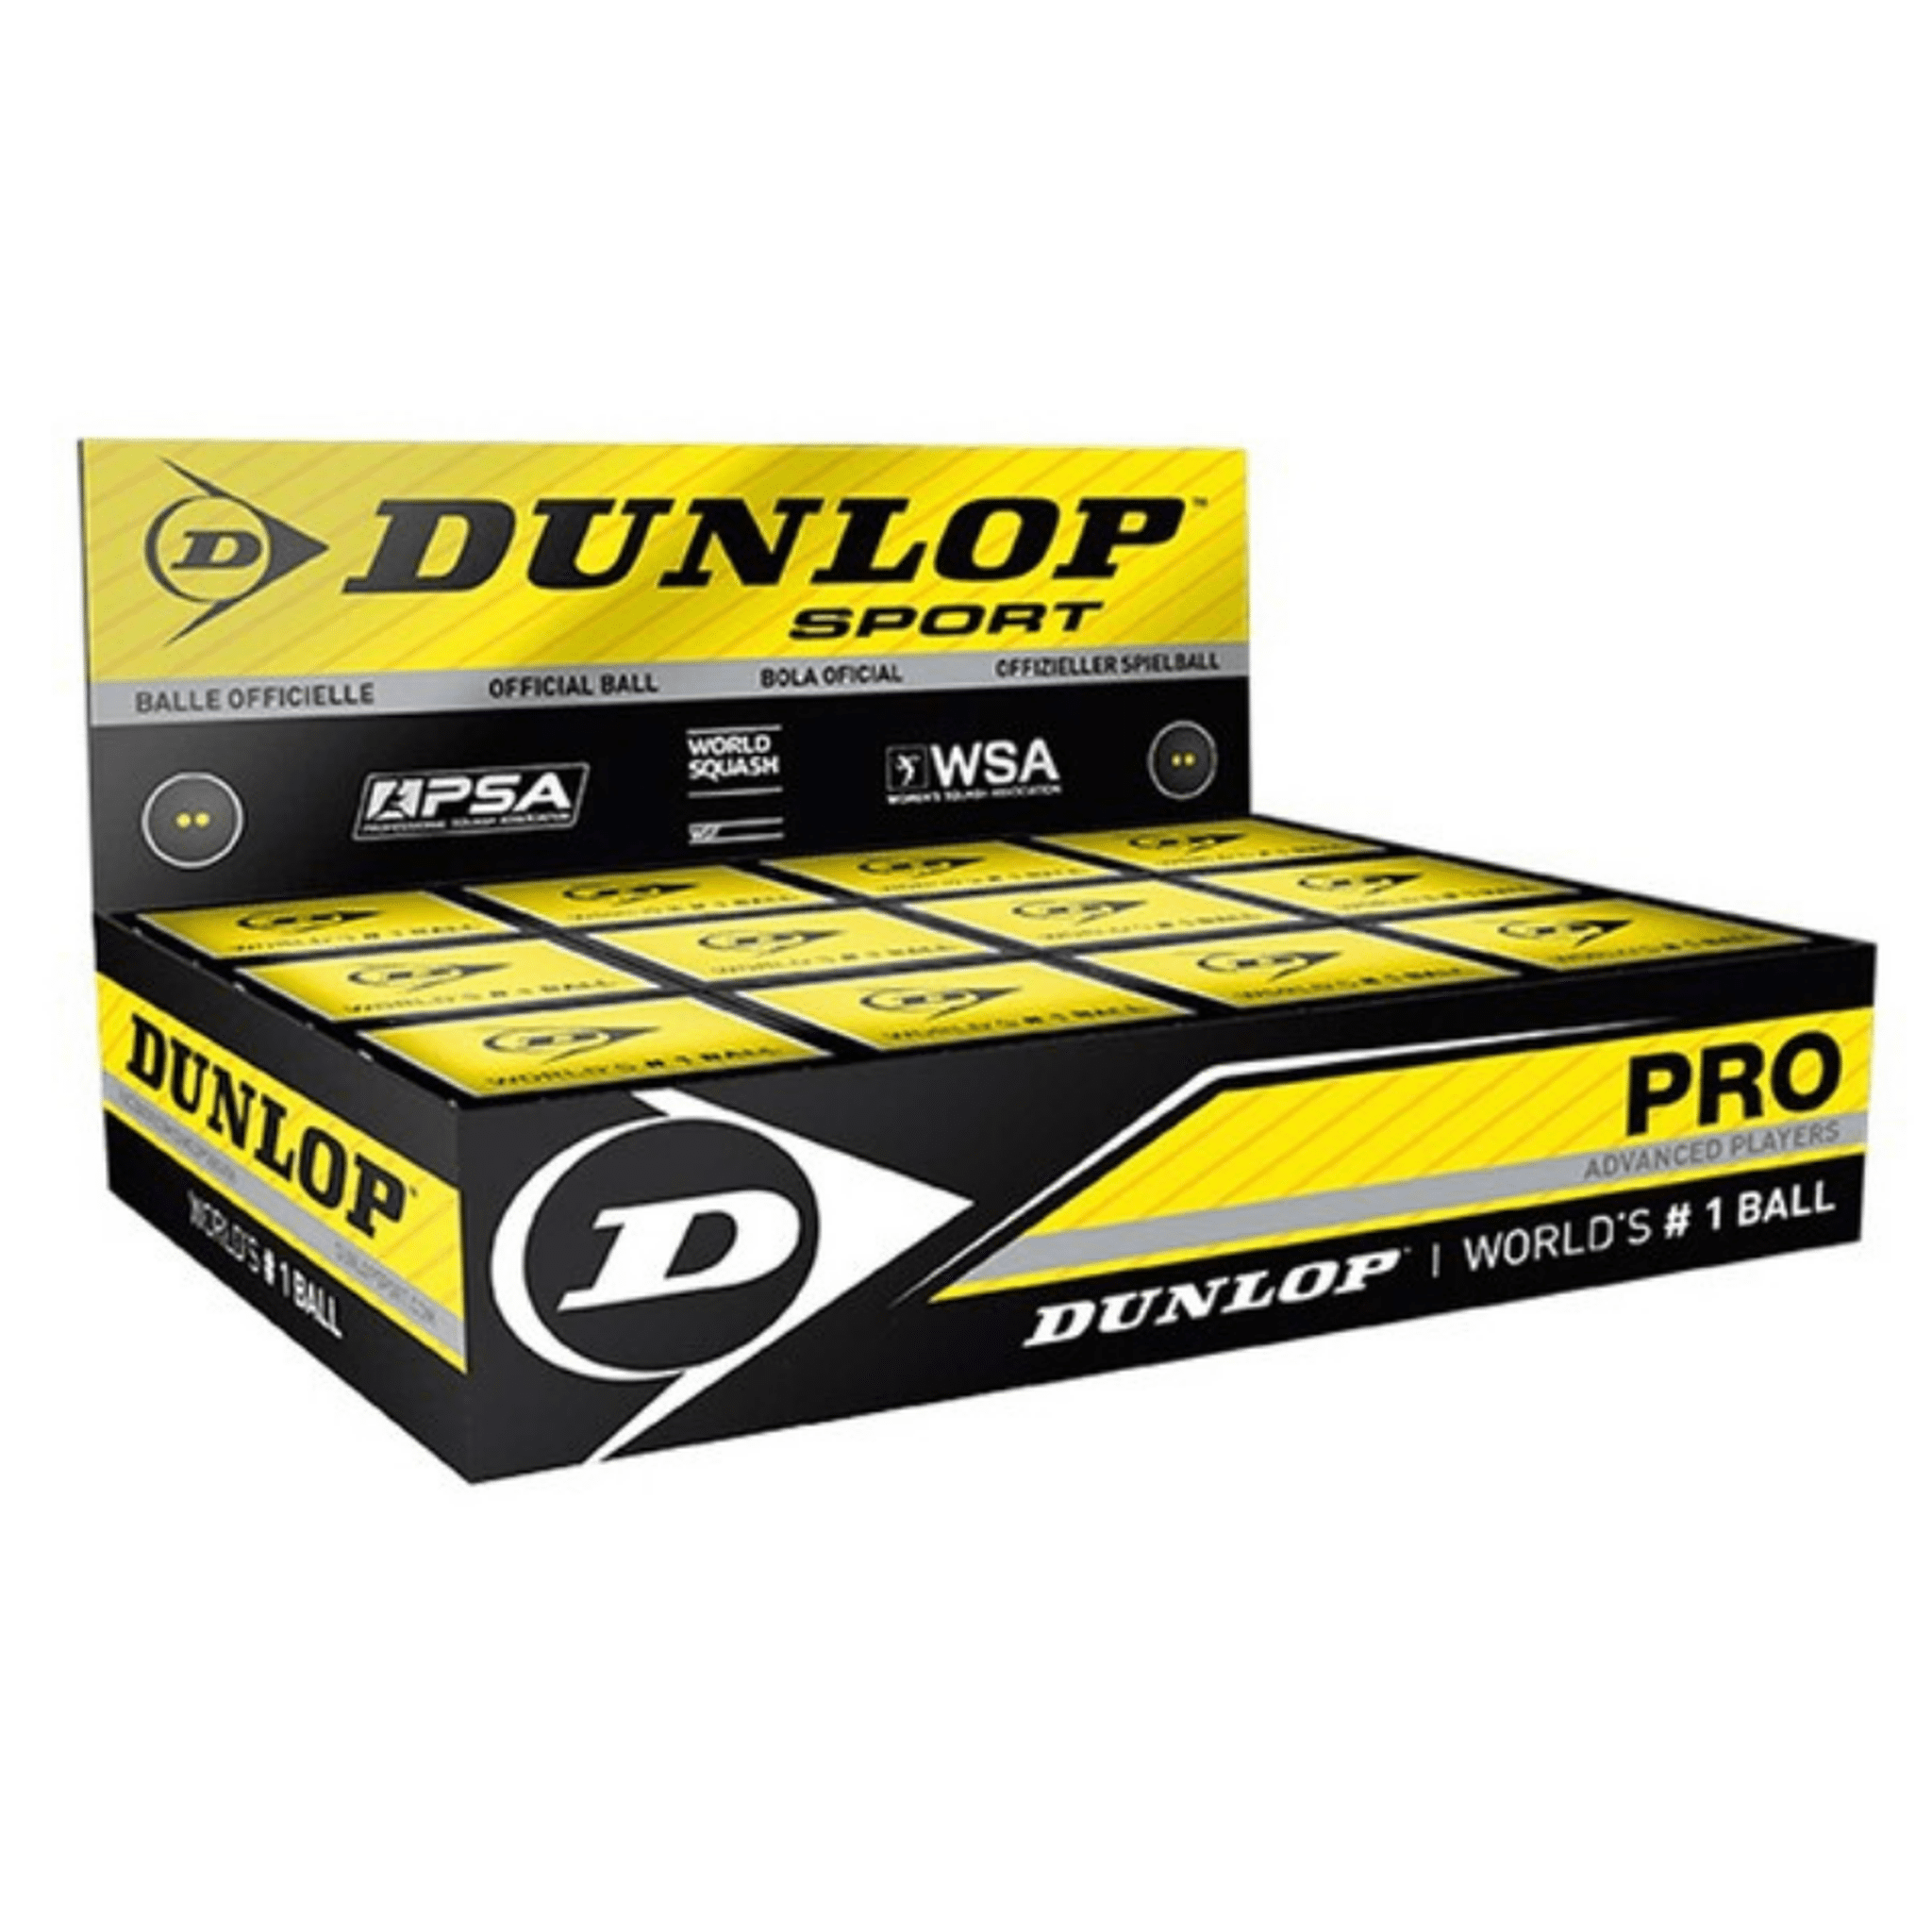 Dunlop Pro Squash Ball - 1 Dozen Double Yellow Dot